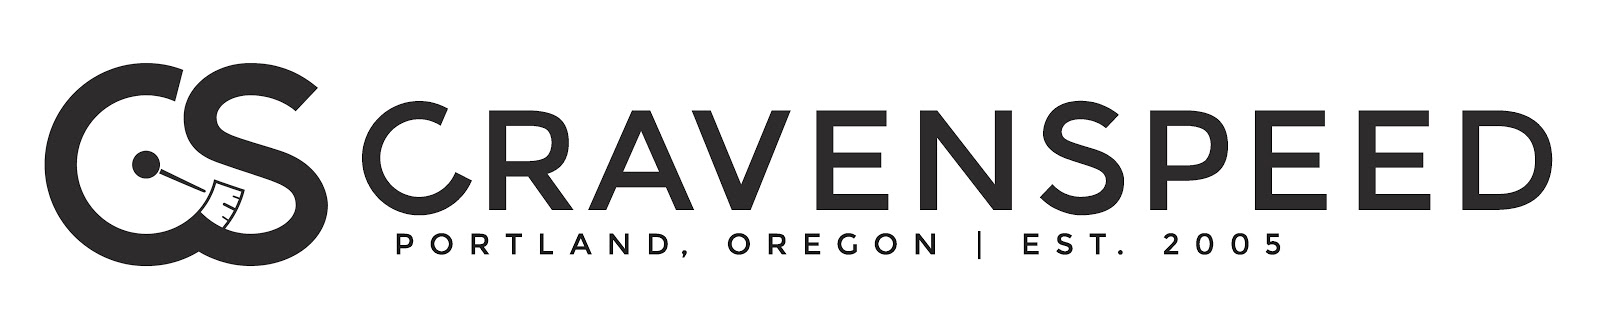 CravenSpeed - Outline logo banner.jpg